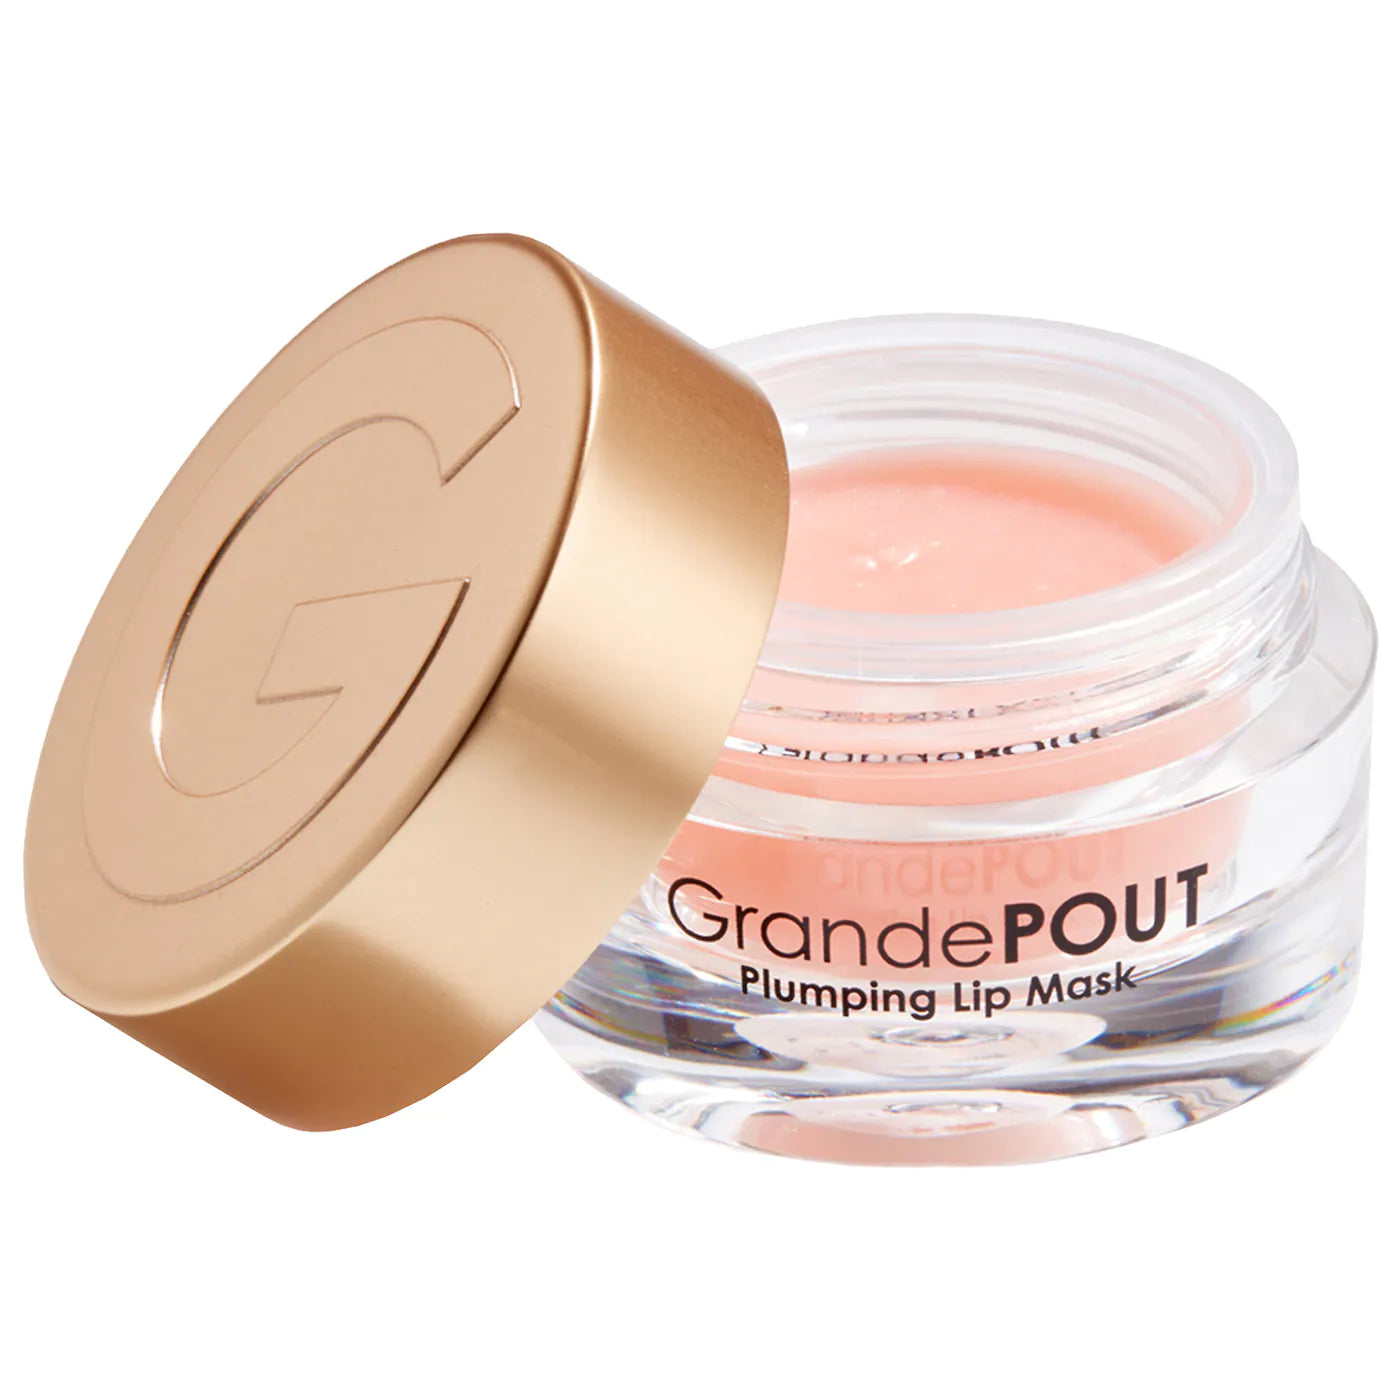 GrandePOUT Plumping Lip Mask